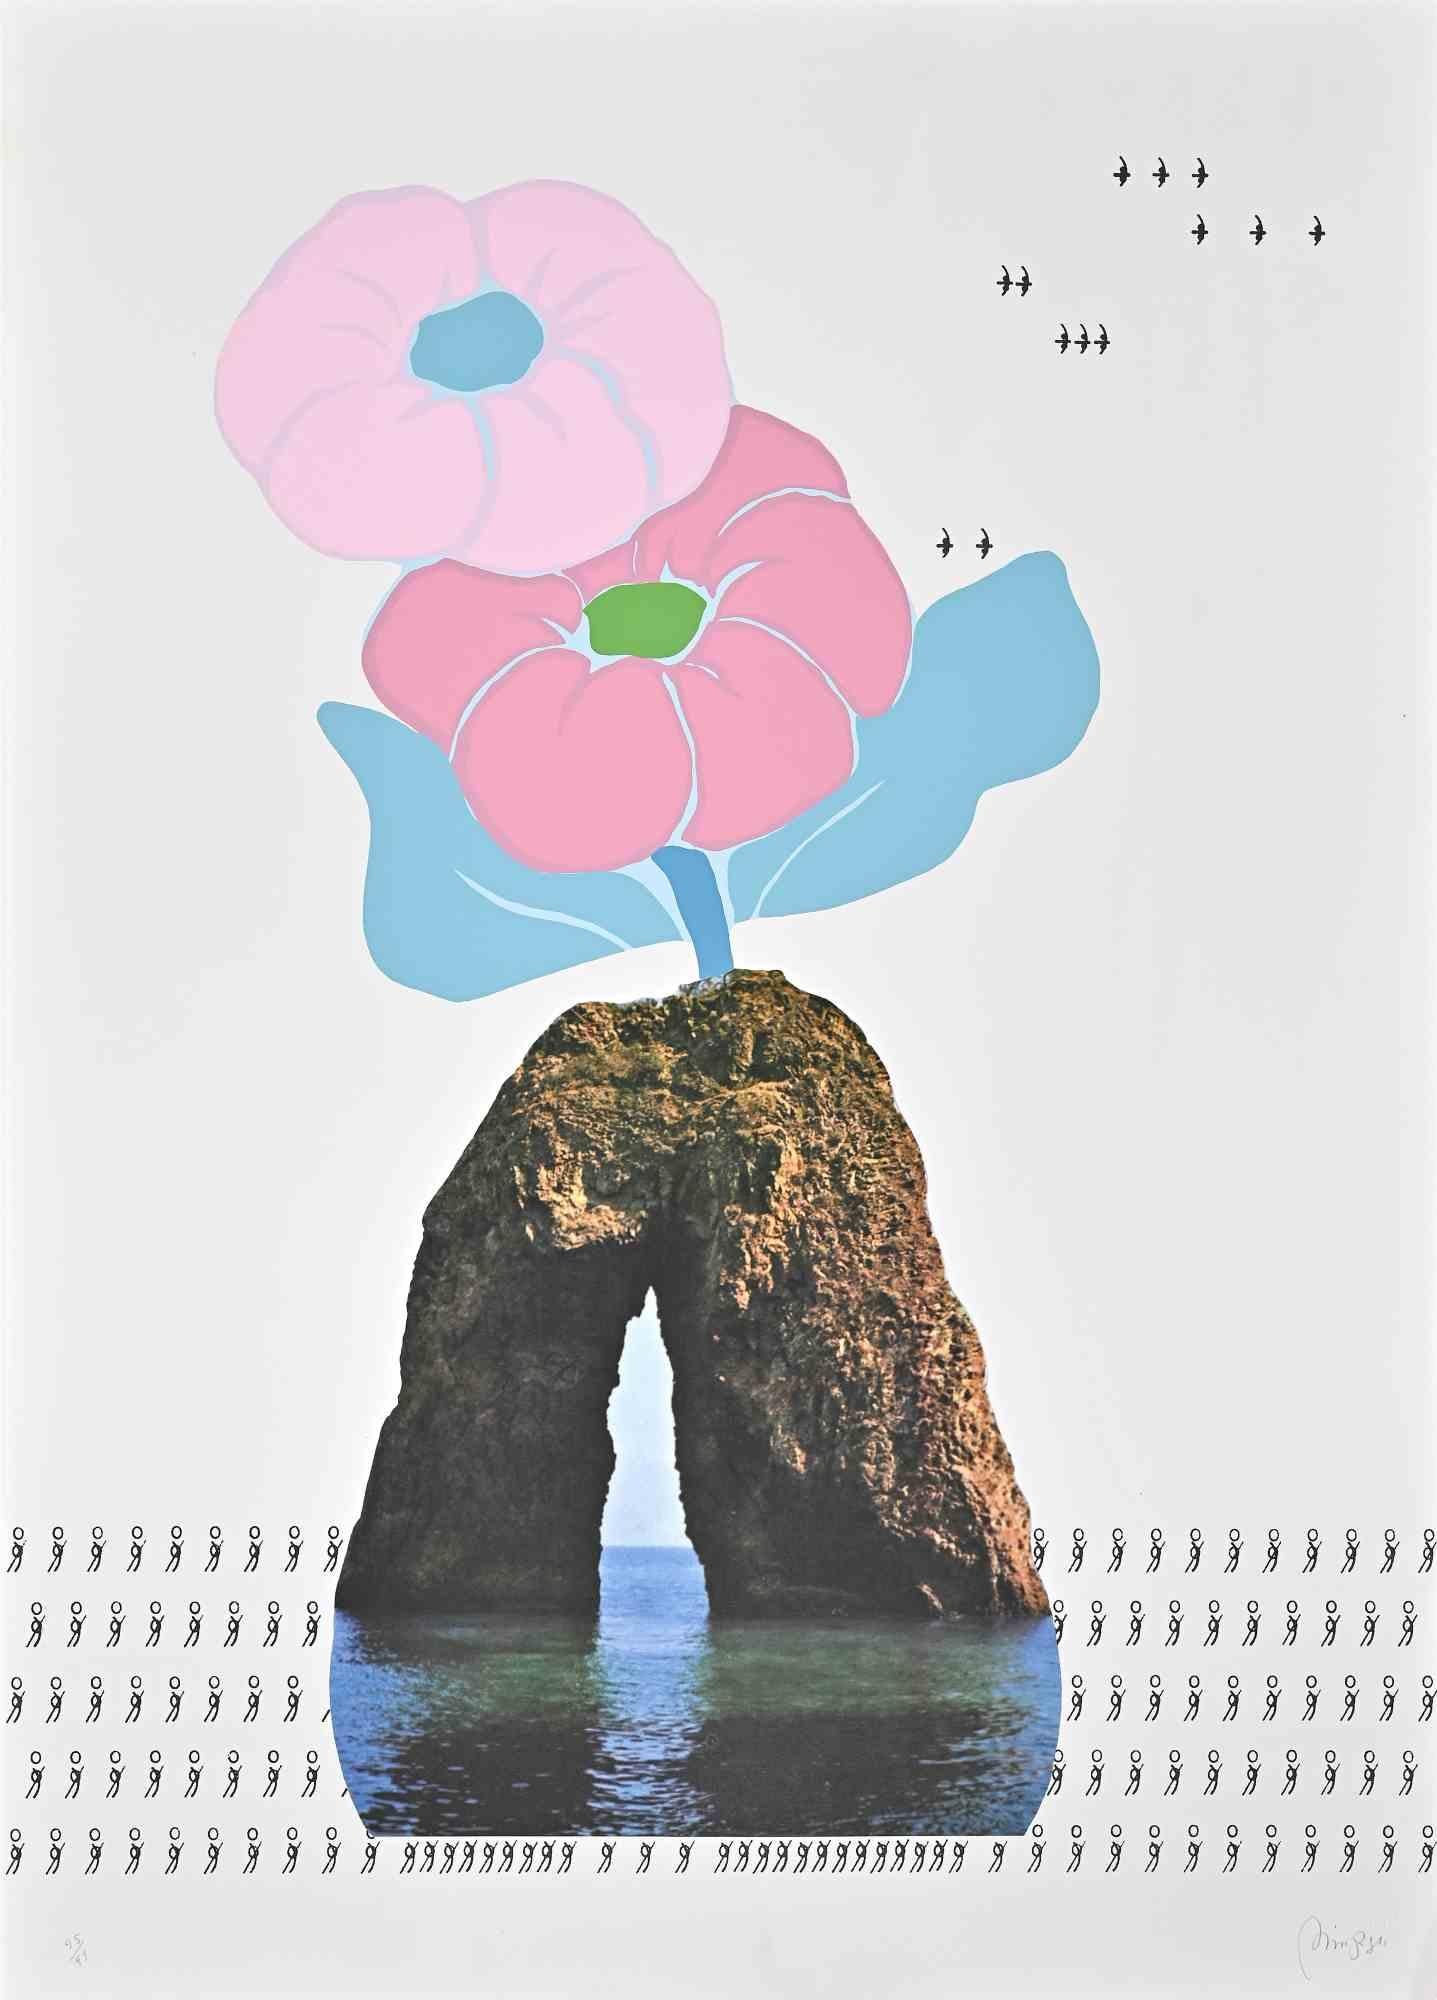 Flower - Original Lithograph by Tomaso Binga - 2000s